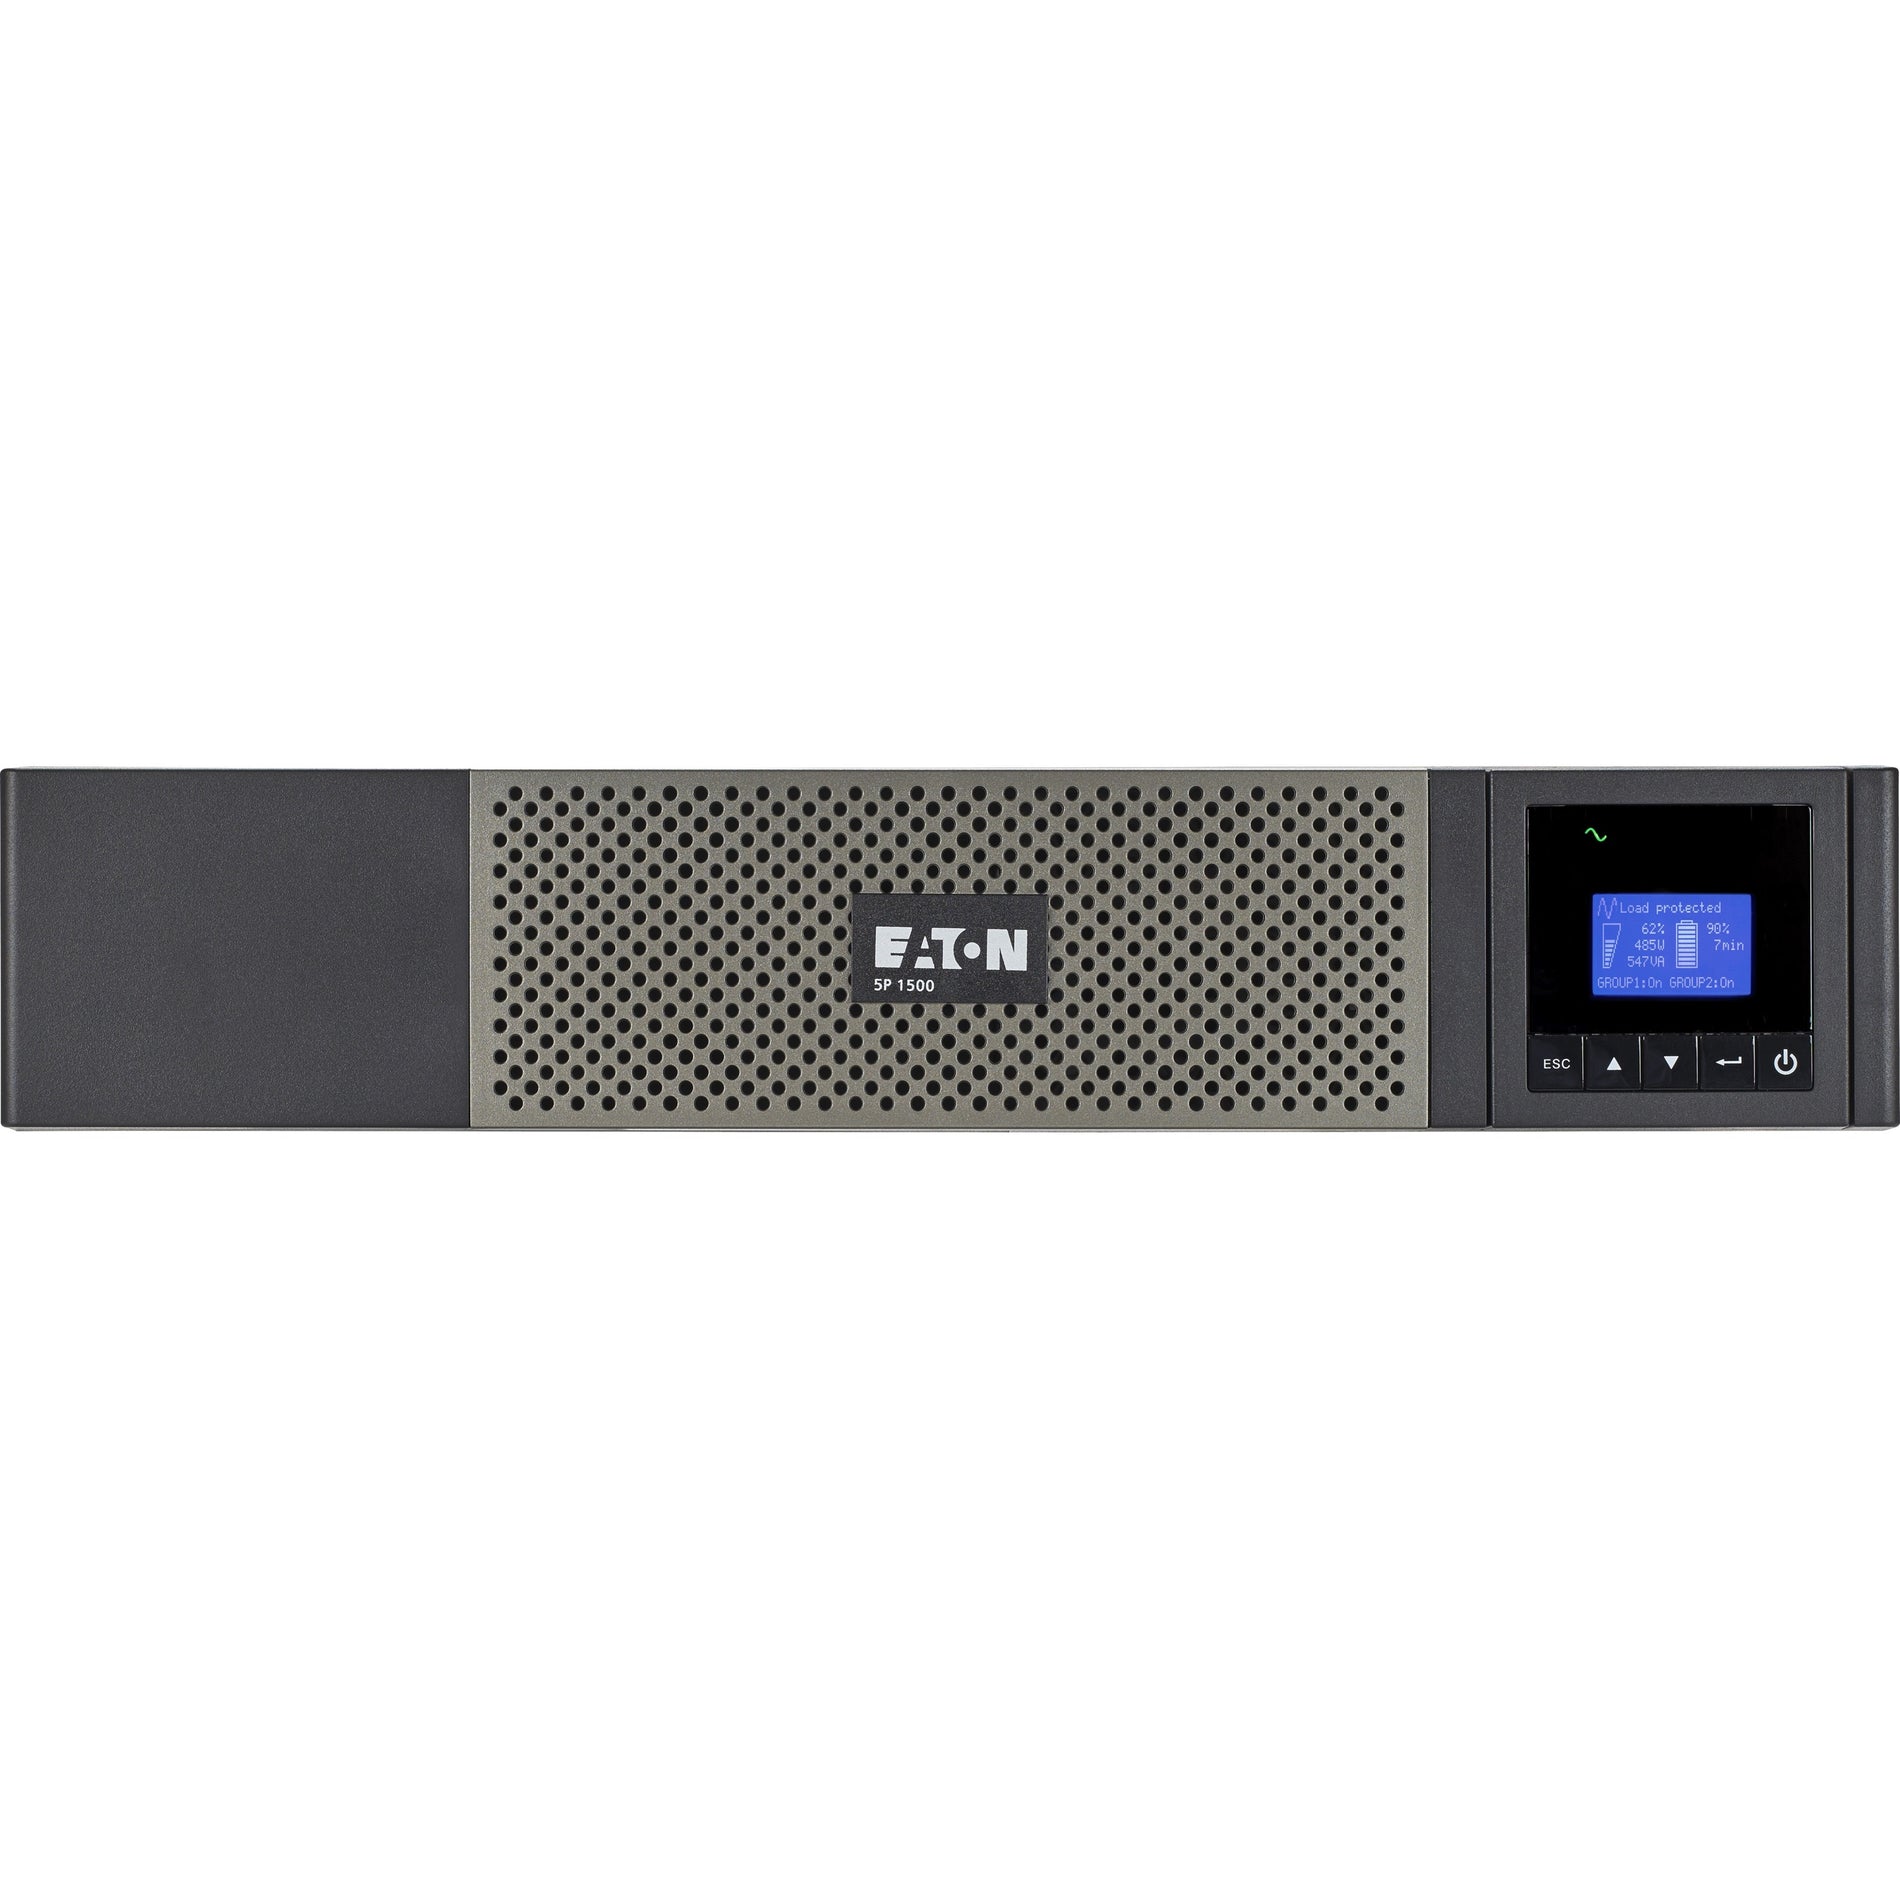 Eaton 5P 5P1500RC 1440VA 1100W 120V Line-Interactive UPS, 10x 5-15R Outlets, 16-Inch Depth, True Sine Wave